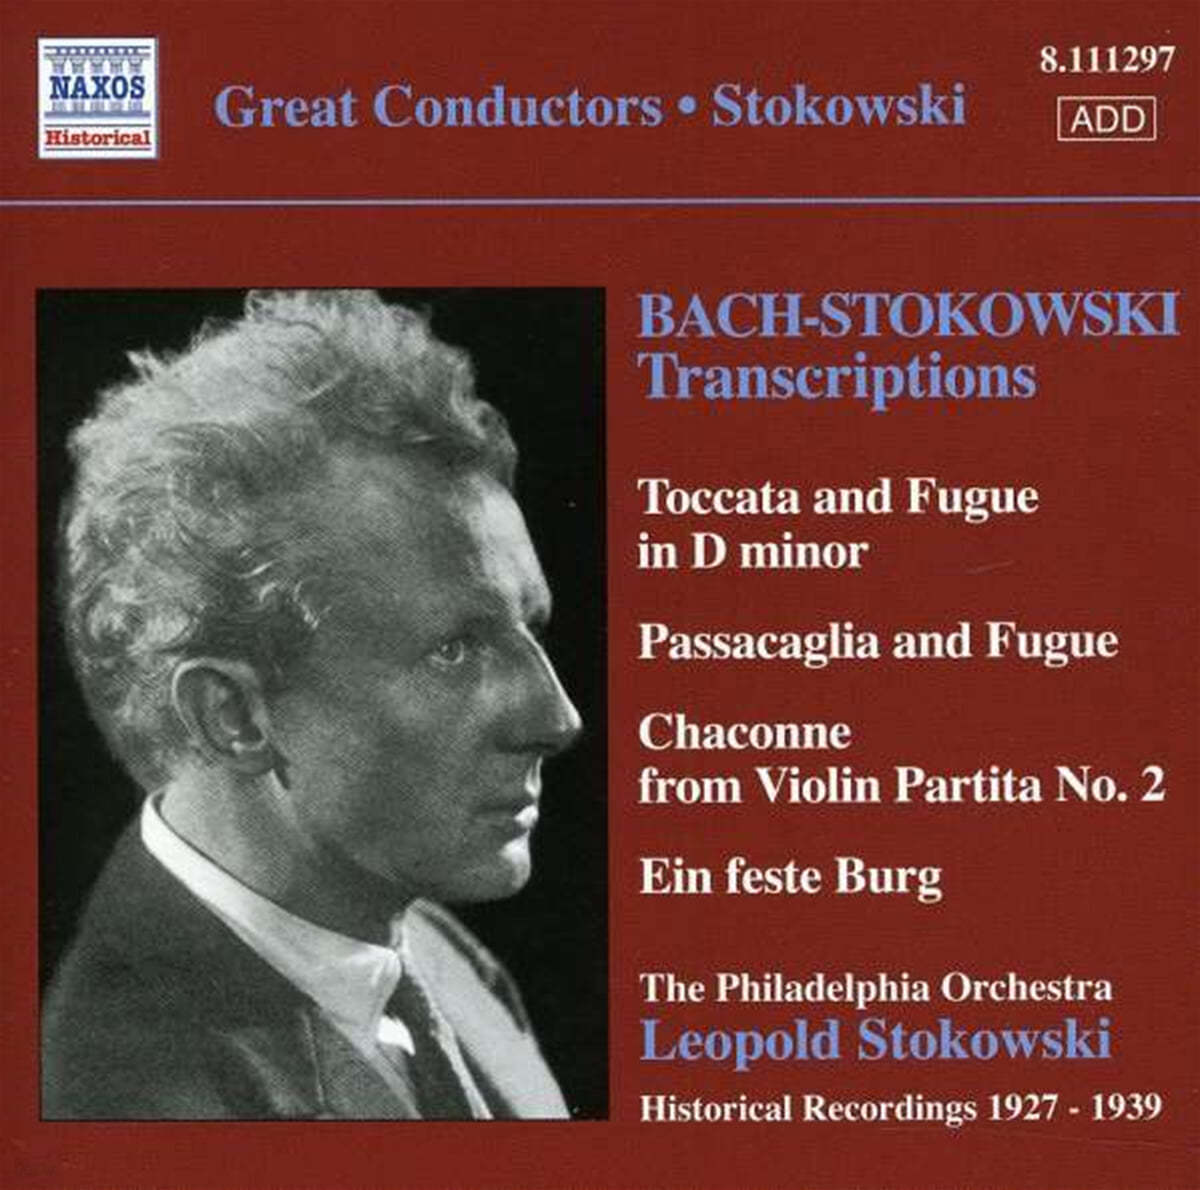 Philadelphia Orchestra 바흐-스토코프스키: 관현악 편곡작품 모음 (J.S.Bach - Stokowski: Transkriptionen) 